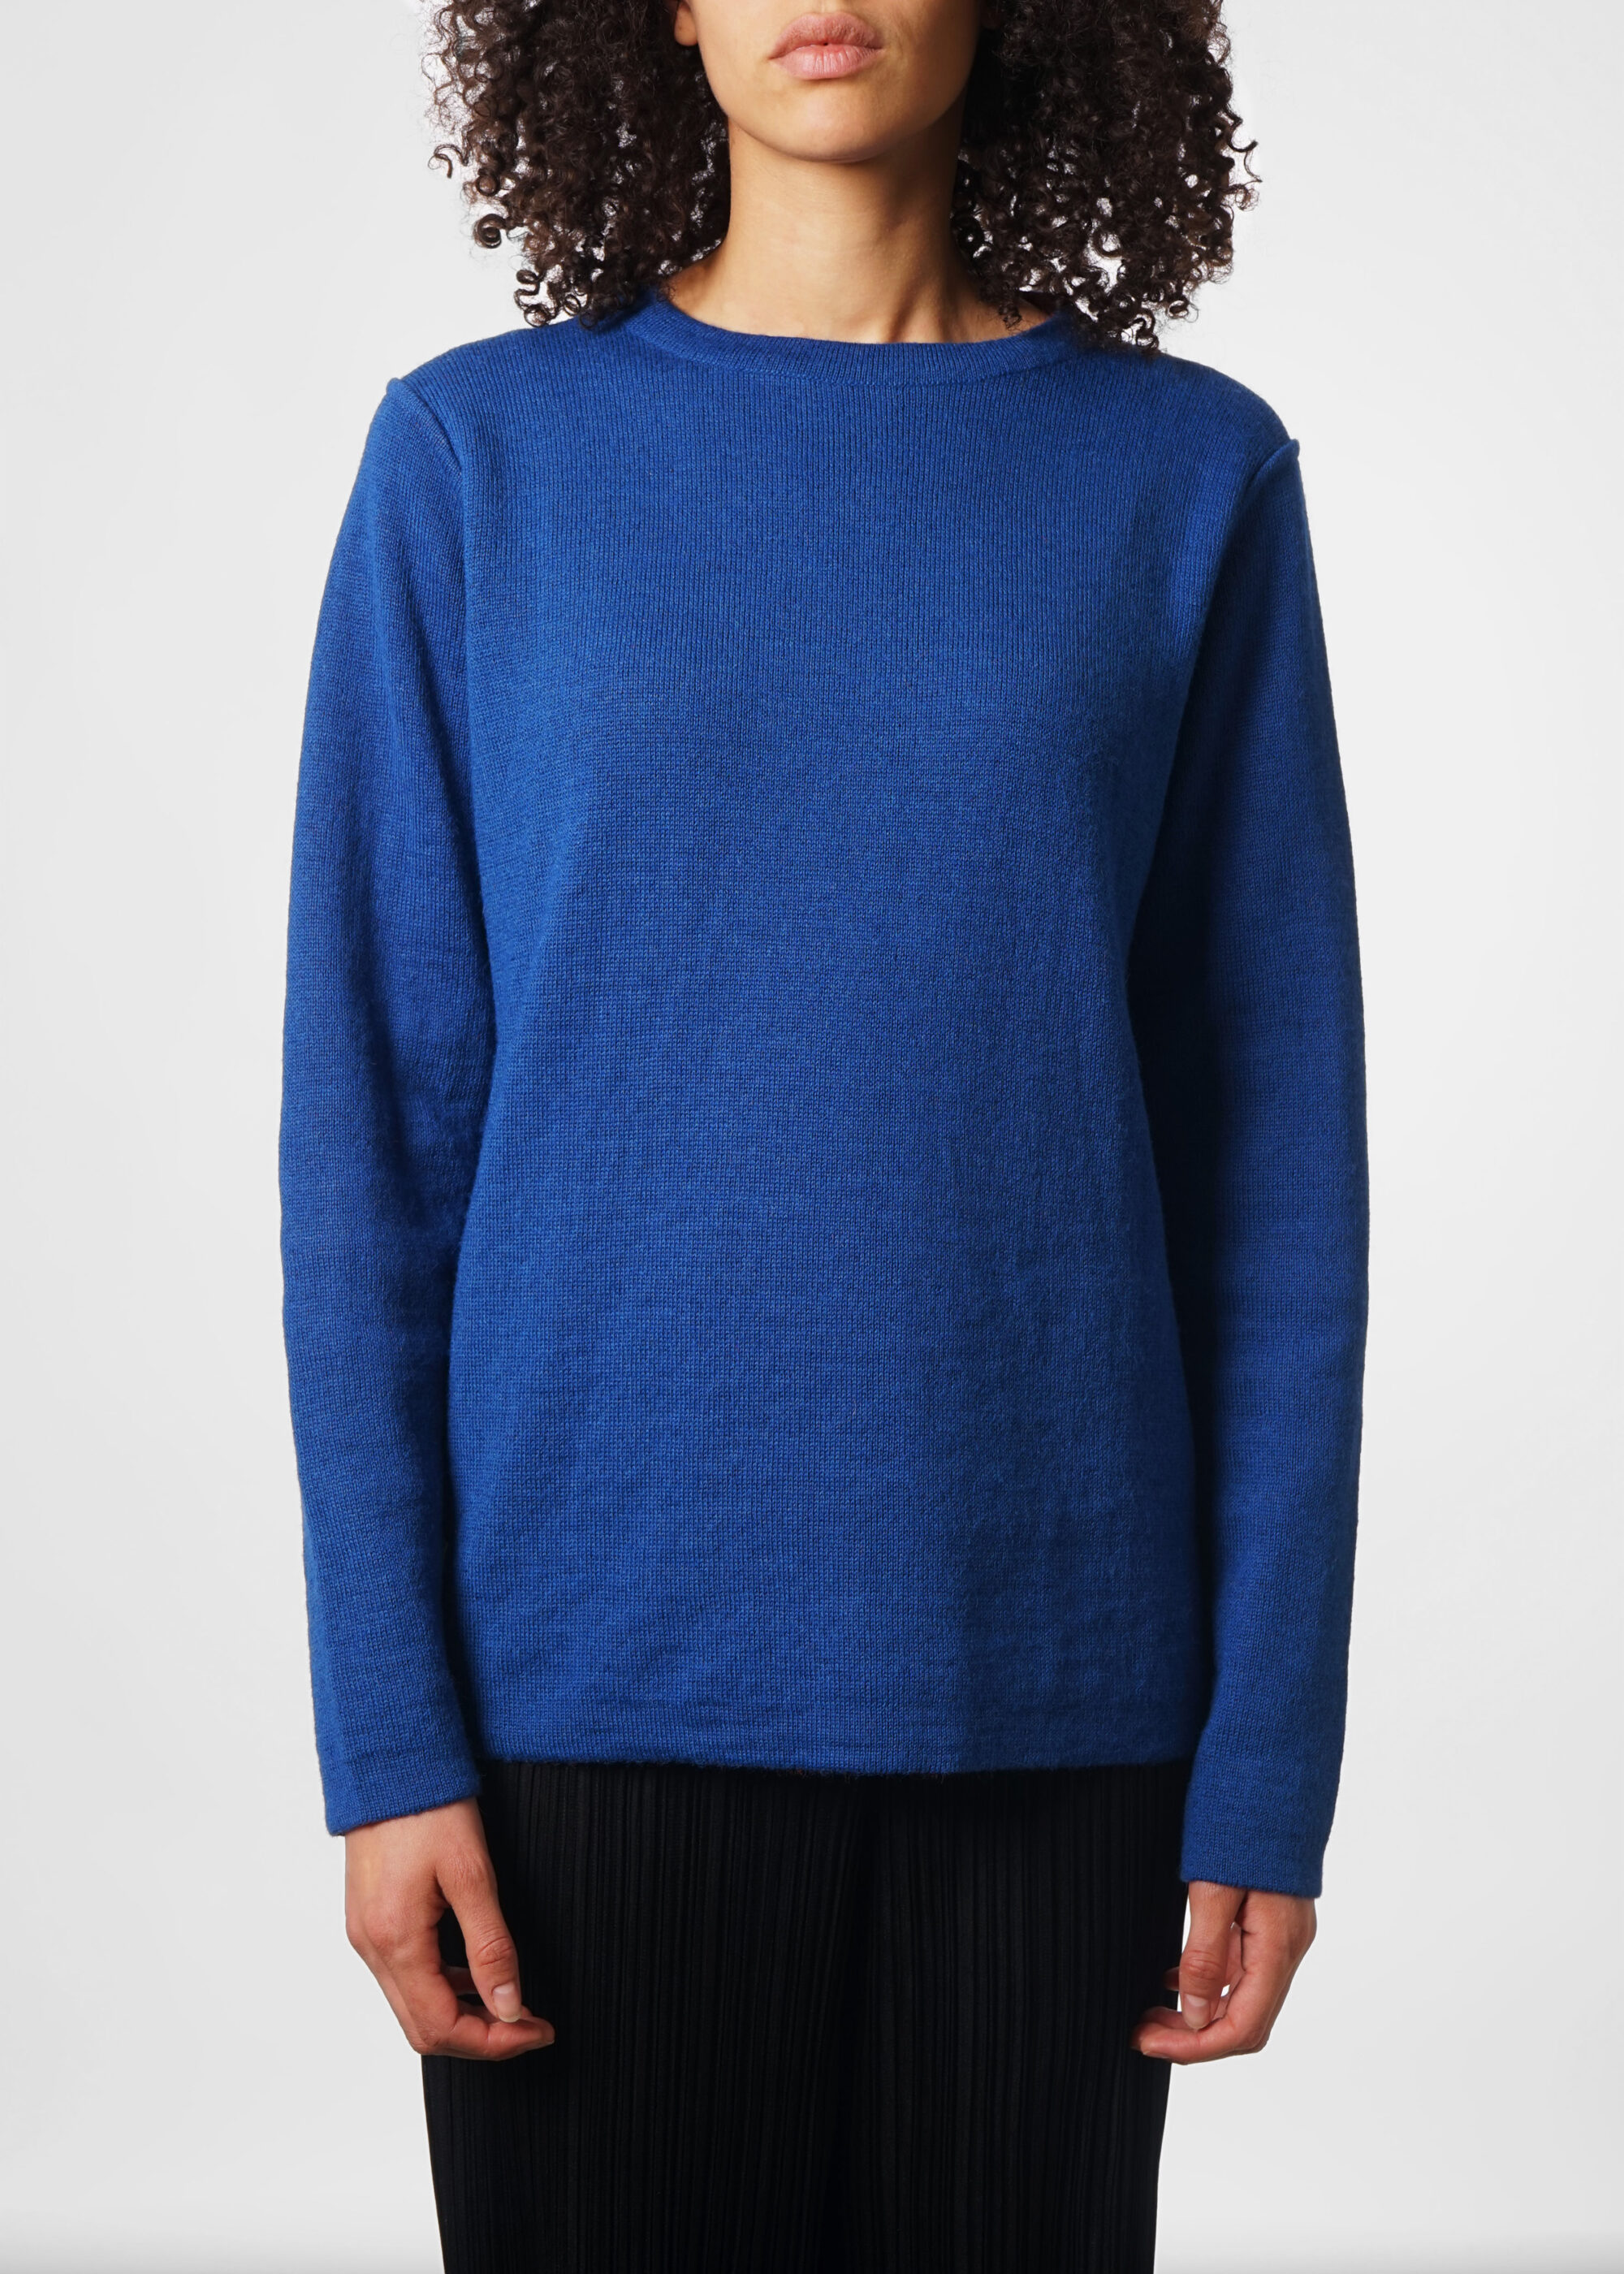 Product image for »Harrison« Orange Cobalt Blue Reversible Sweater Alpaca